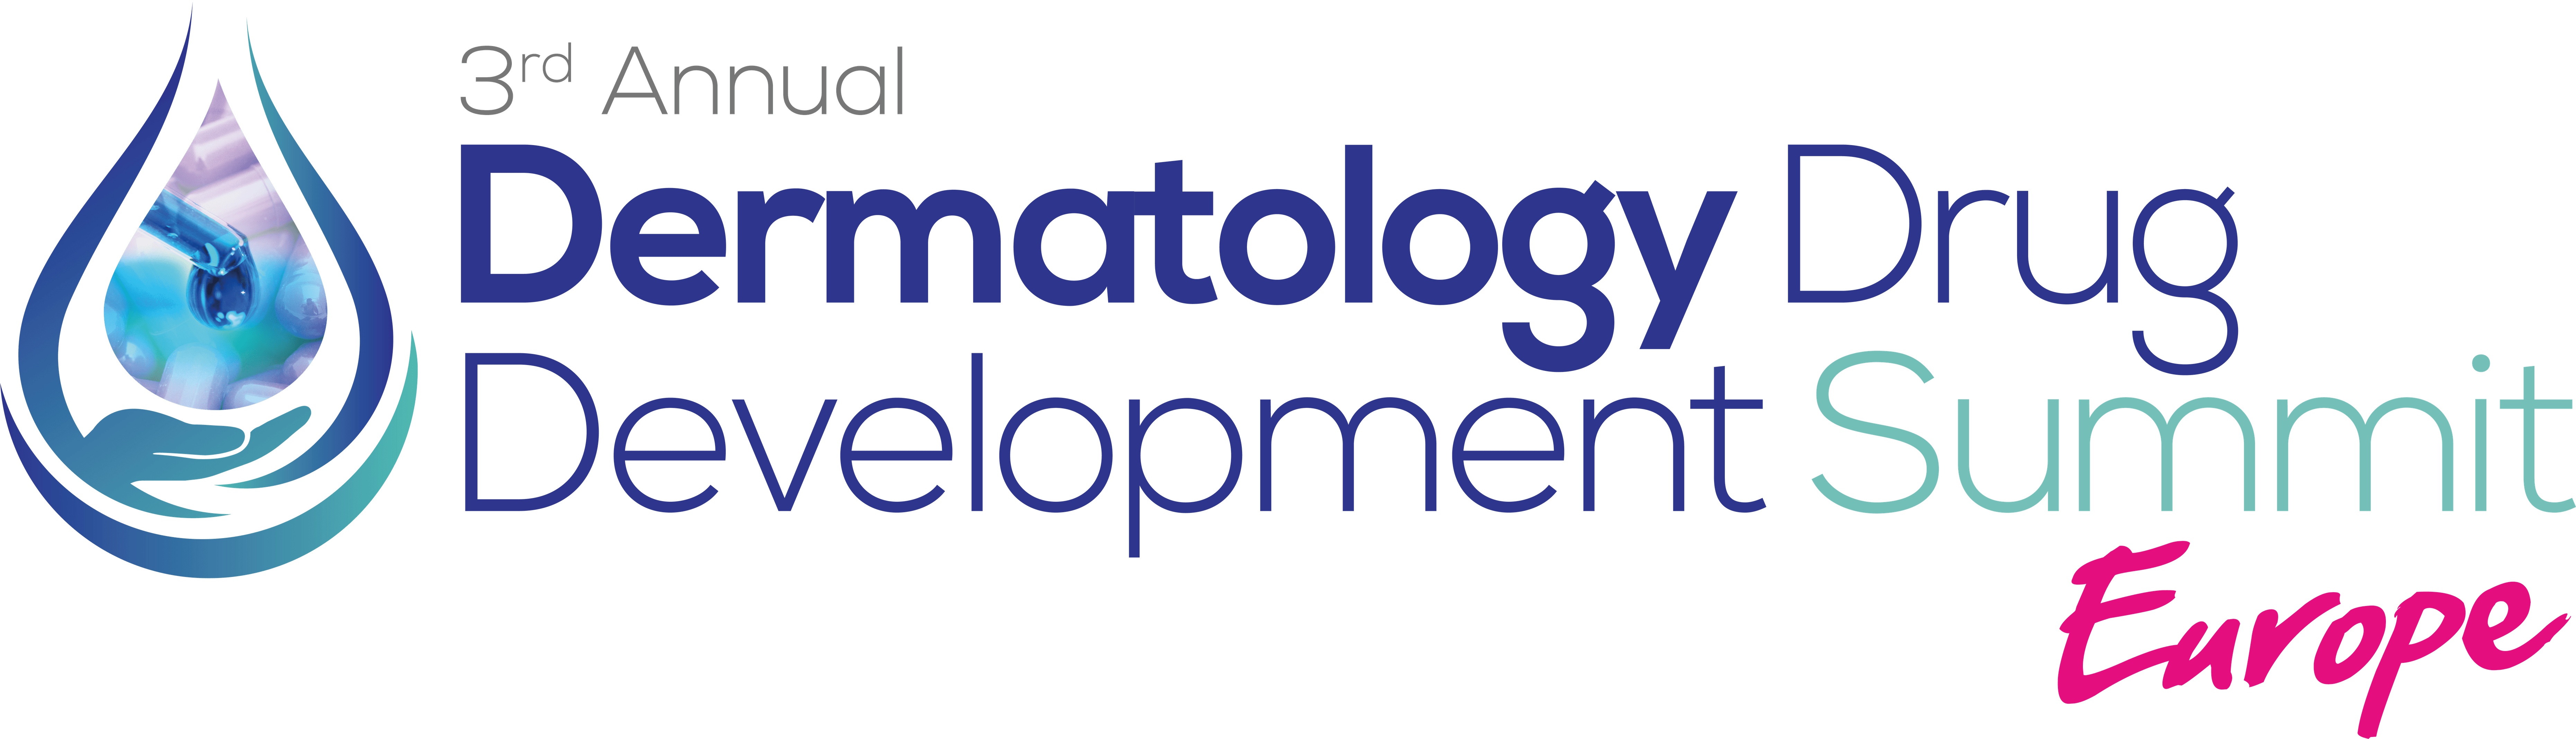 Dermatology Drug Development Europe 2022 logo